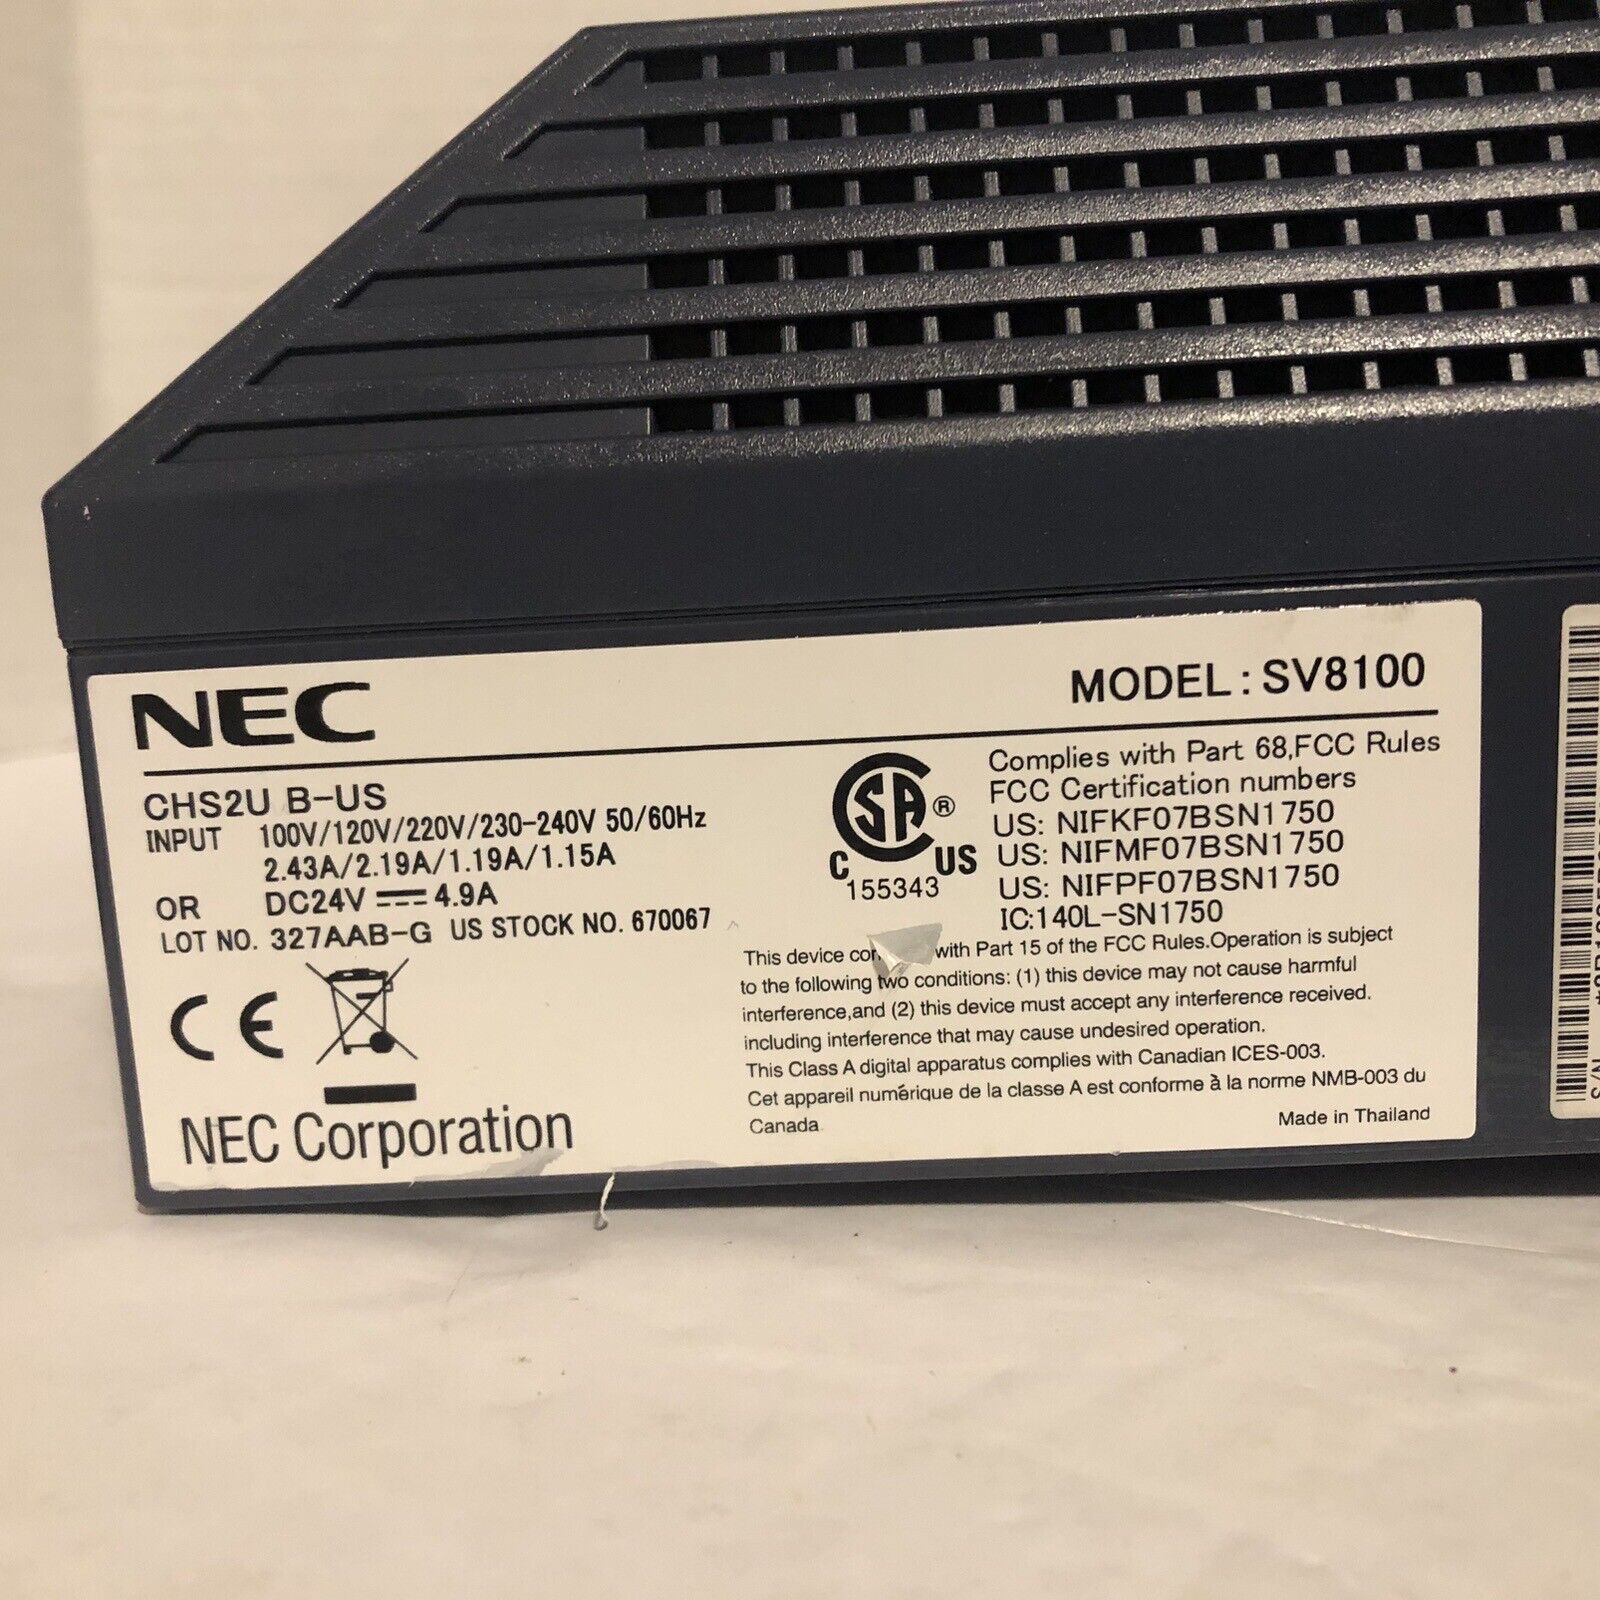 NEC CHS2U B-US Univerge Phone System W/ CD-CP00 No Cords Tested Good